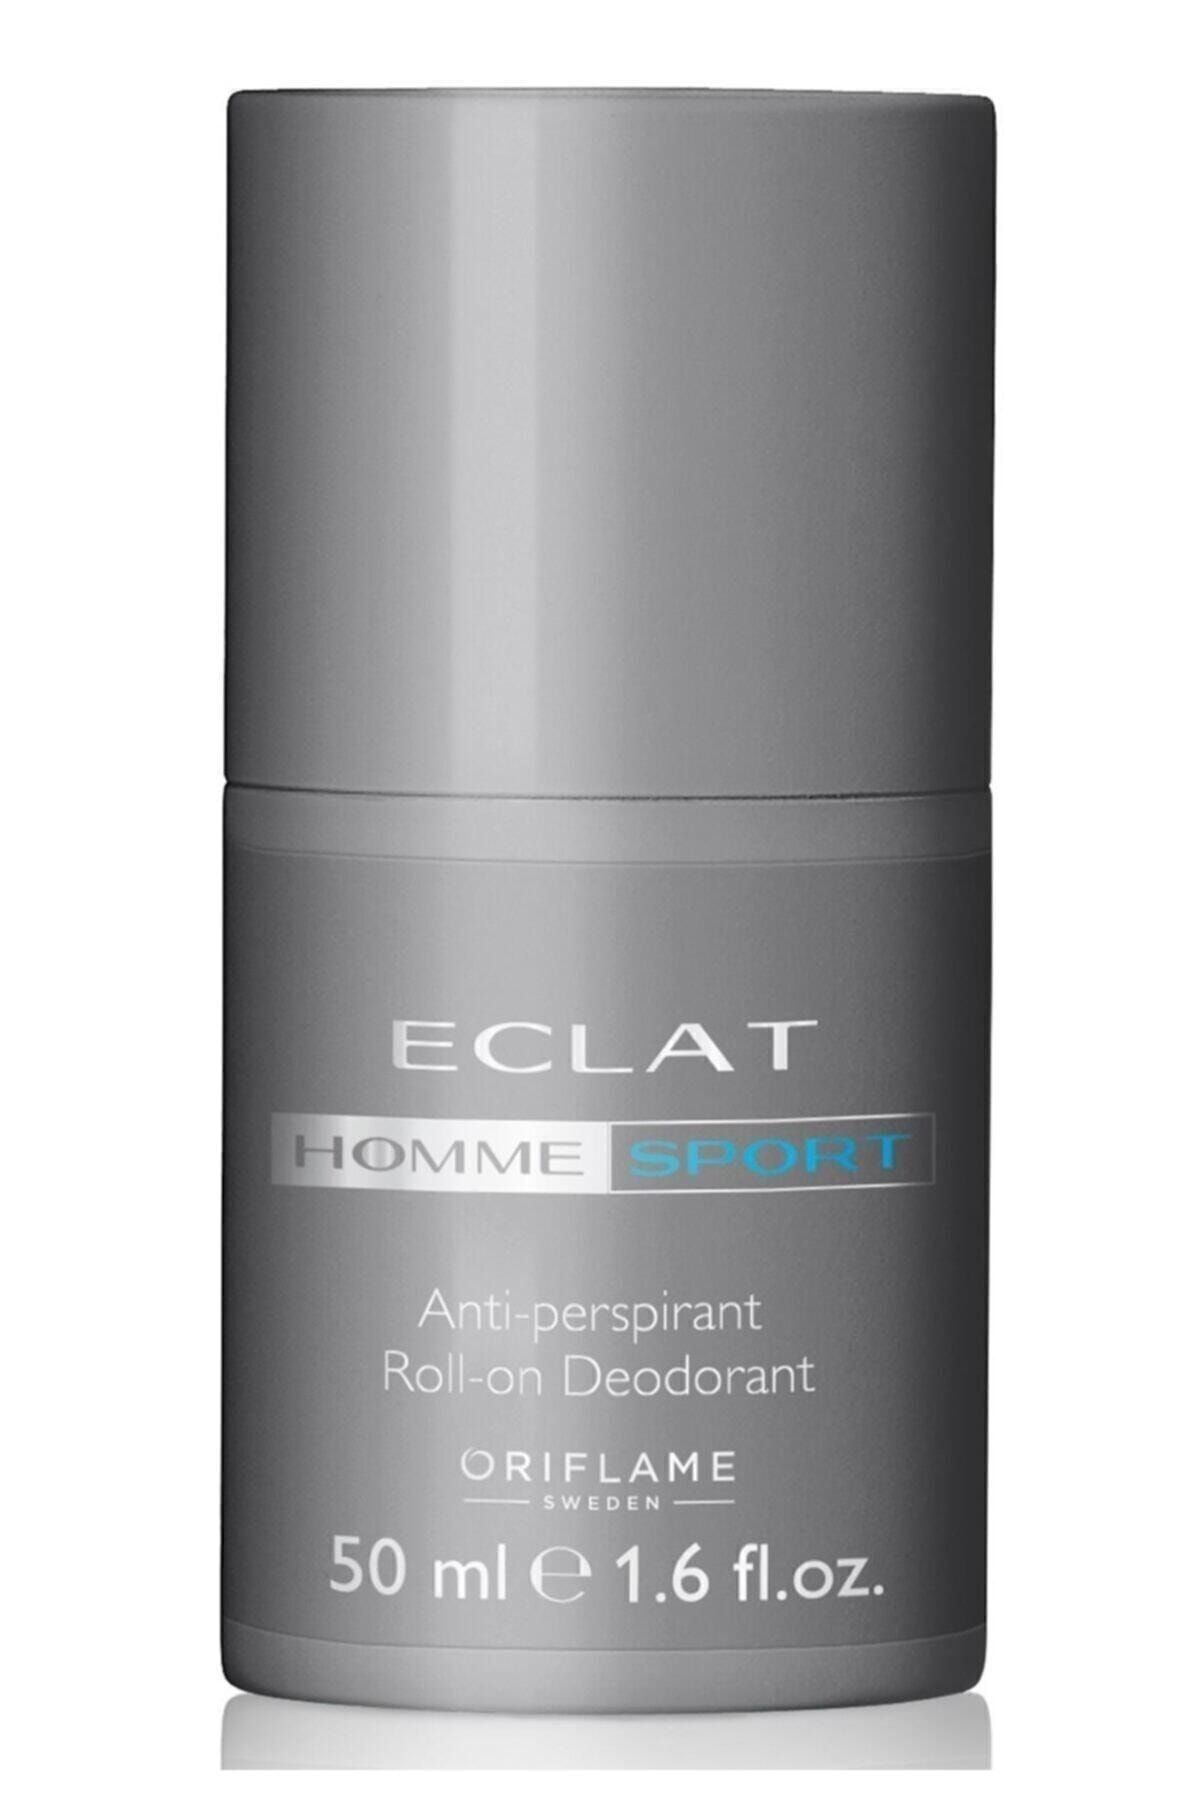 Oriflame Eclat Homme Sport Anti-perspirant Roll-on Deodorant